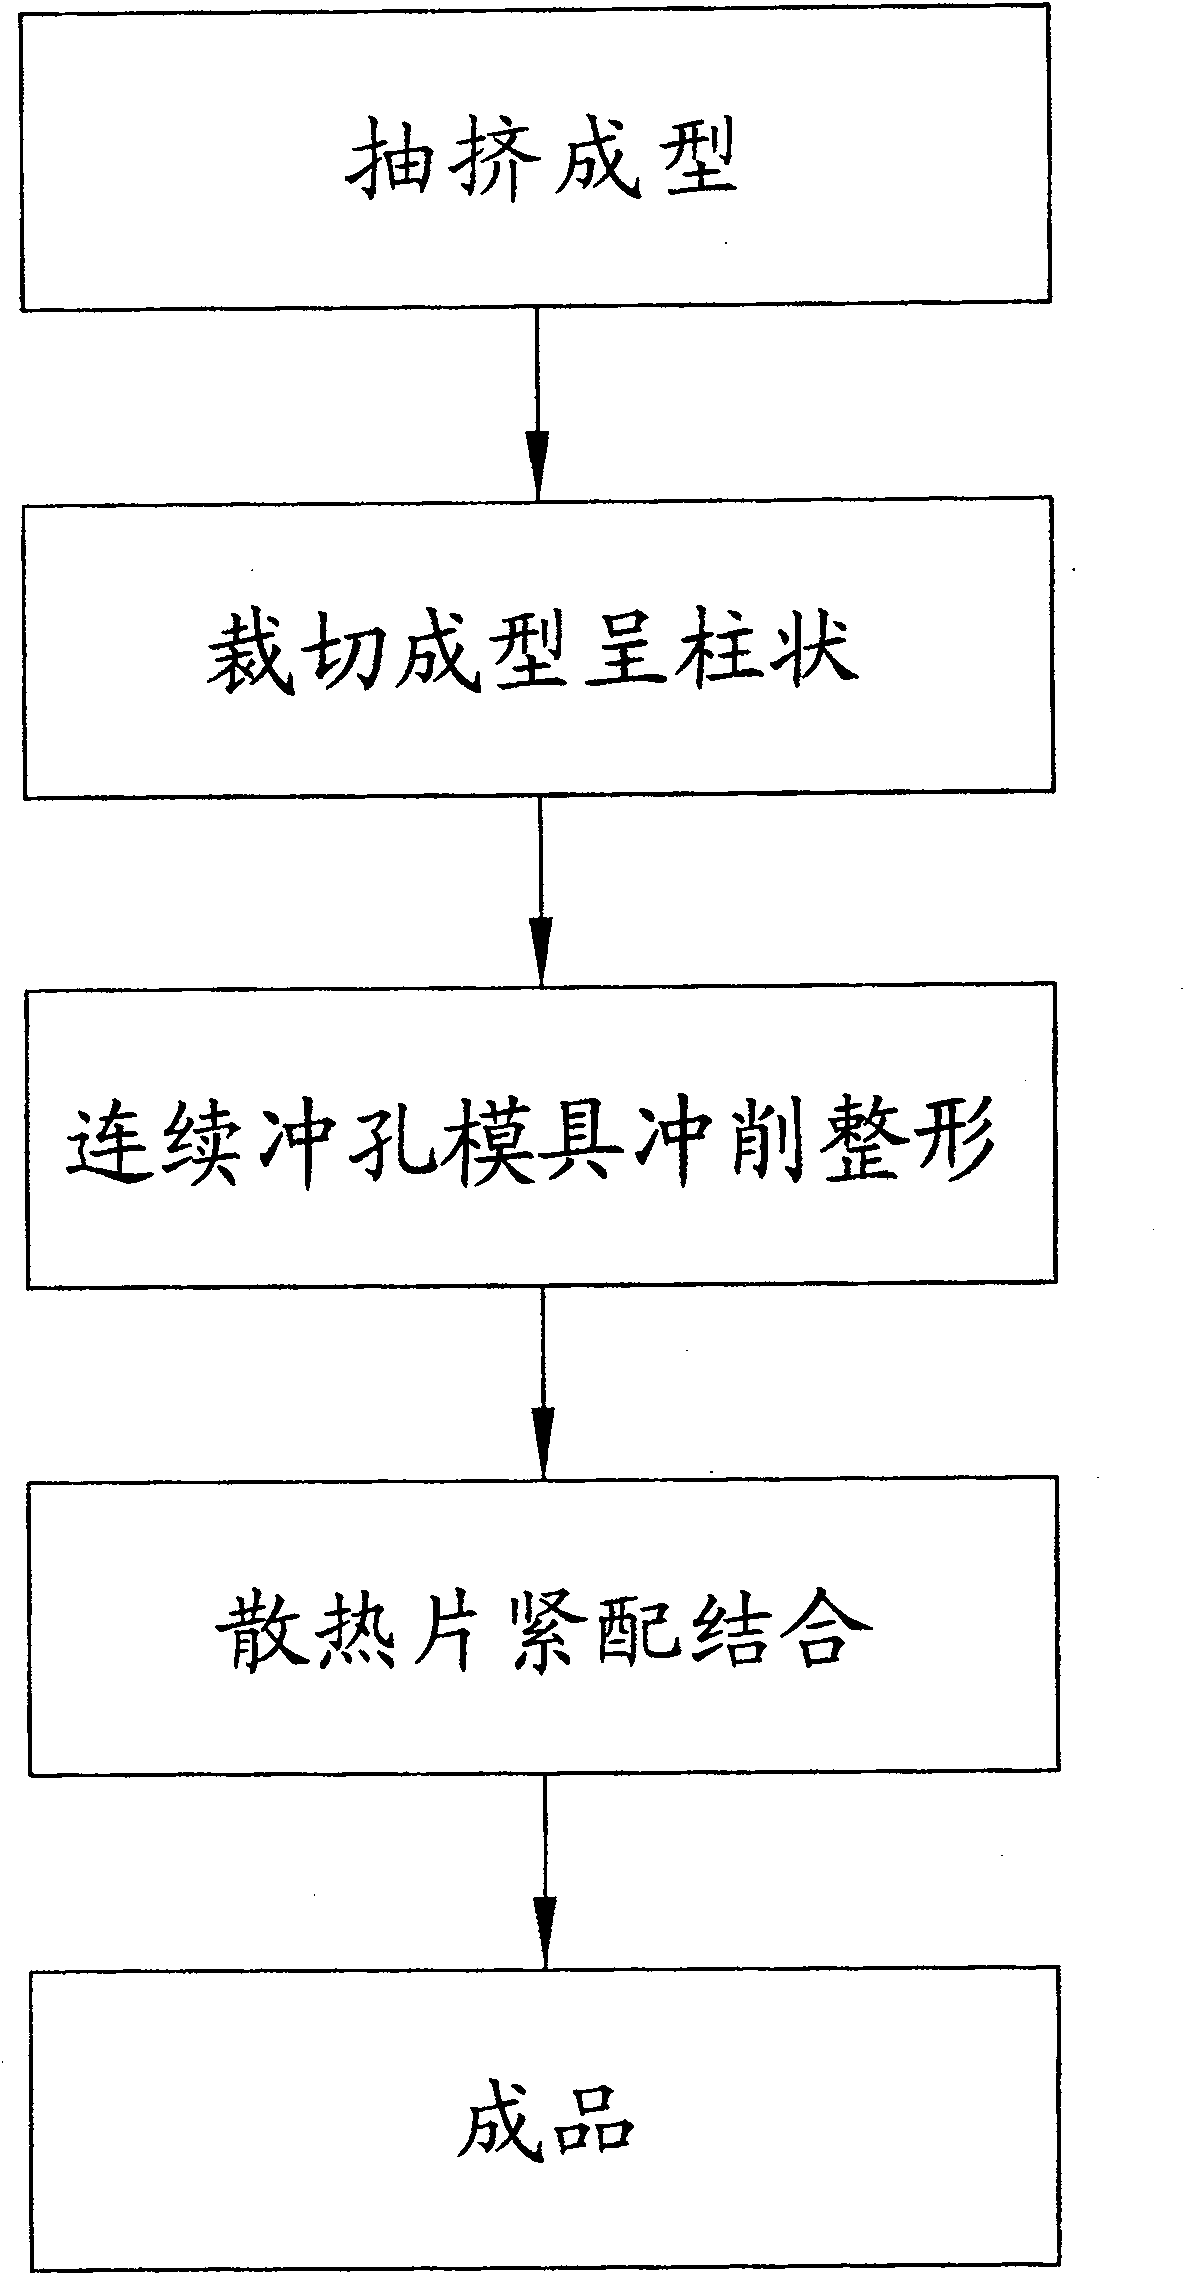 Method for producing column-shaped radiator